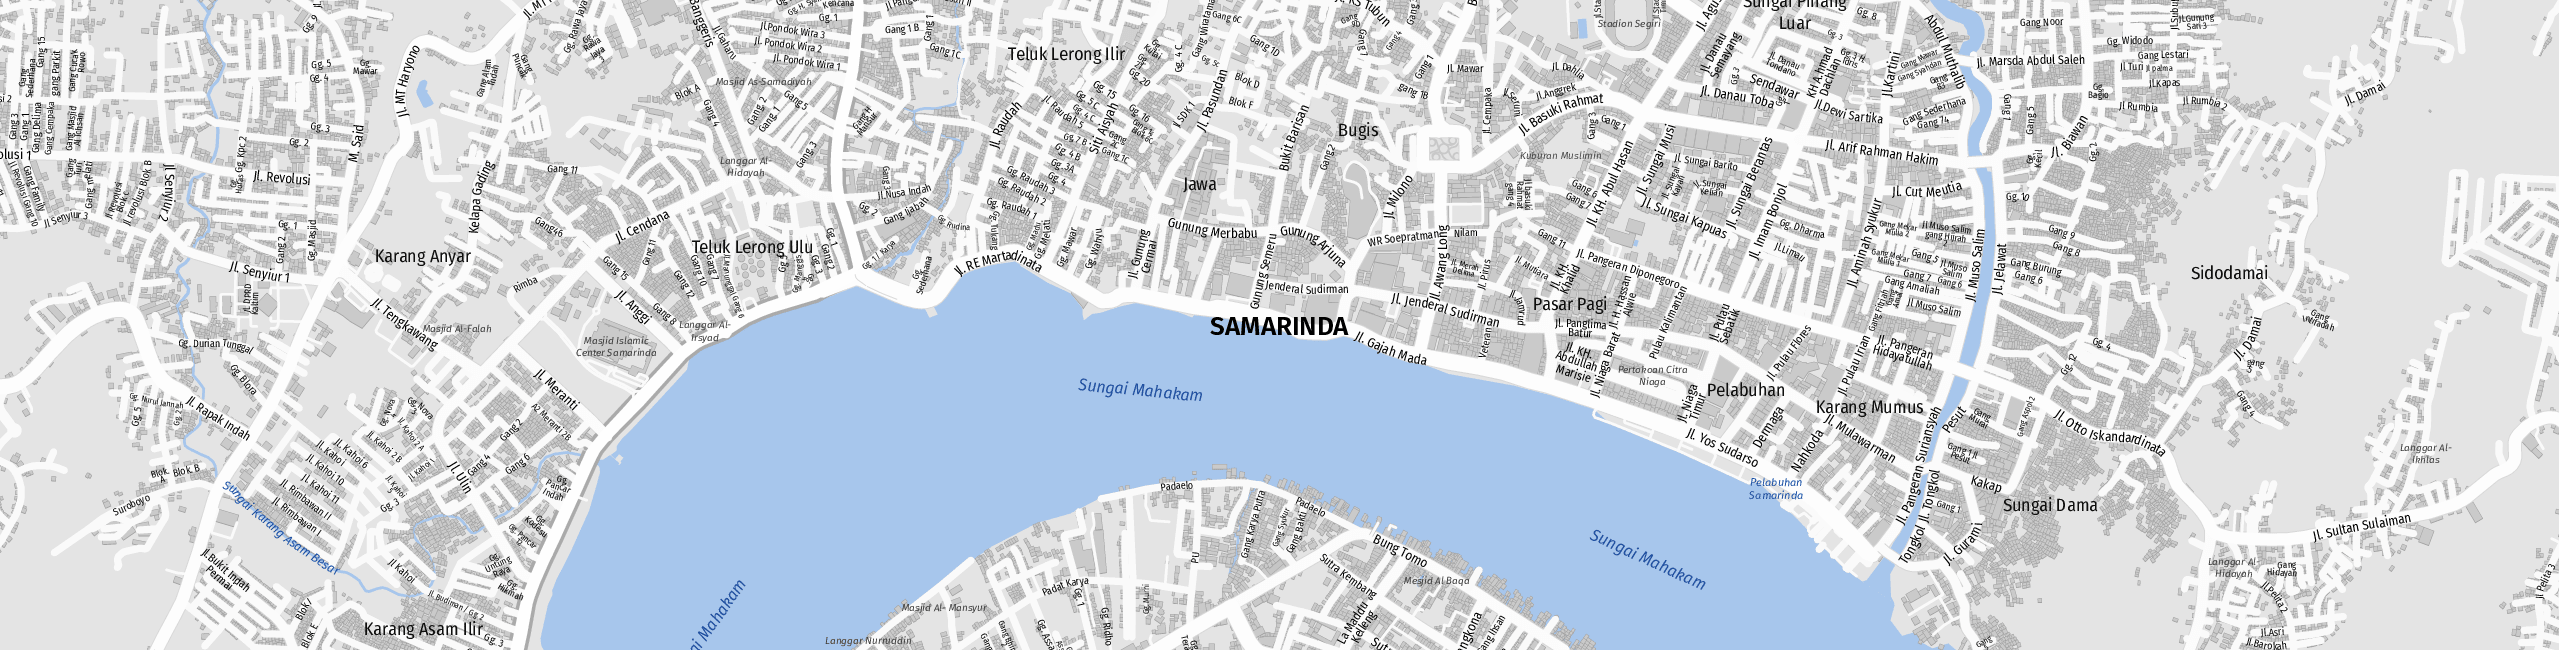 Stadtplan Samarinda zum Downloaden.